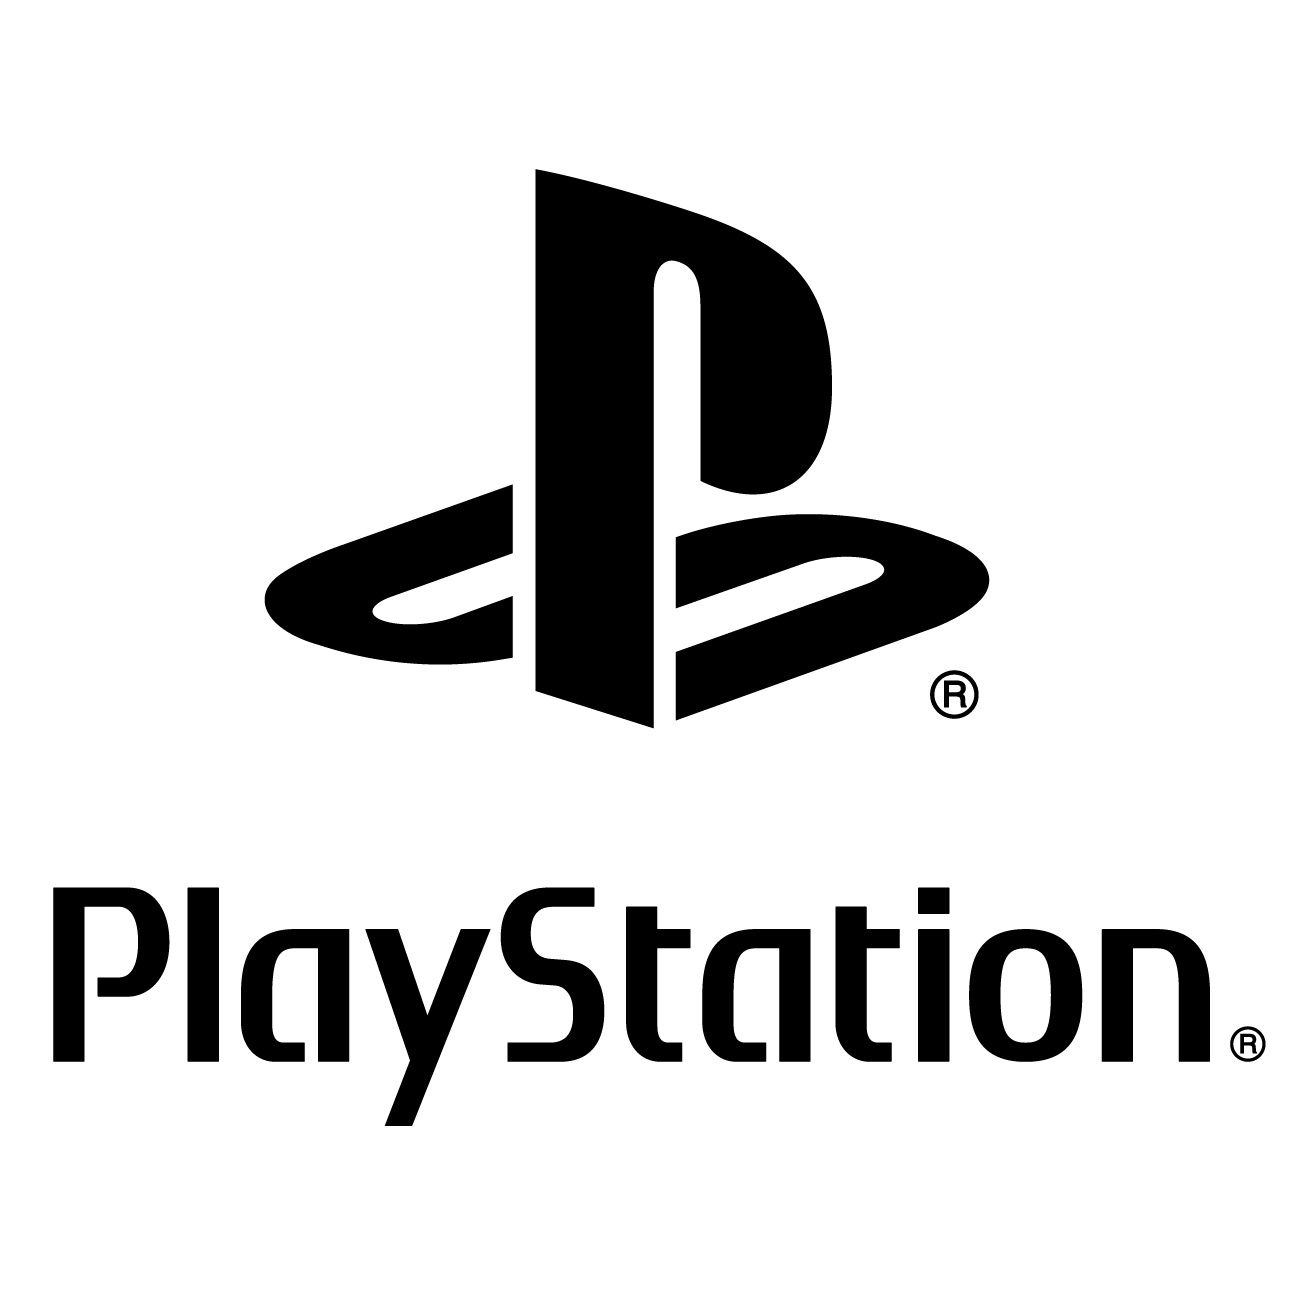 PlayStation 1 Logo - PlayStation Fiesta Bowl - Fiesta Bowl | Fiesta Bowl